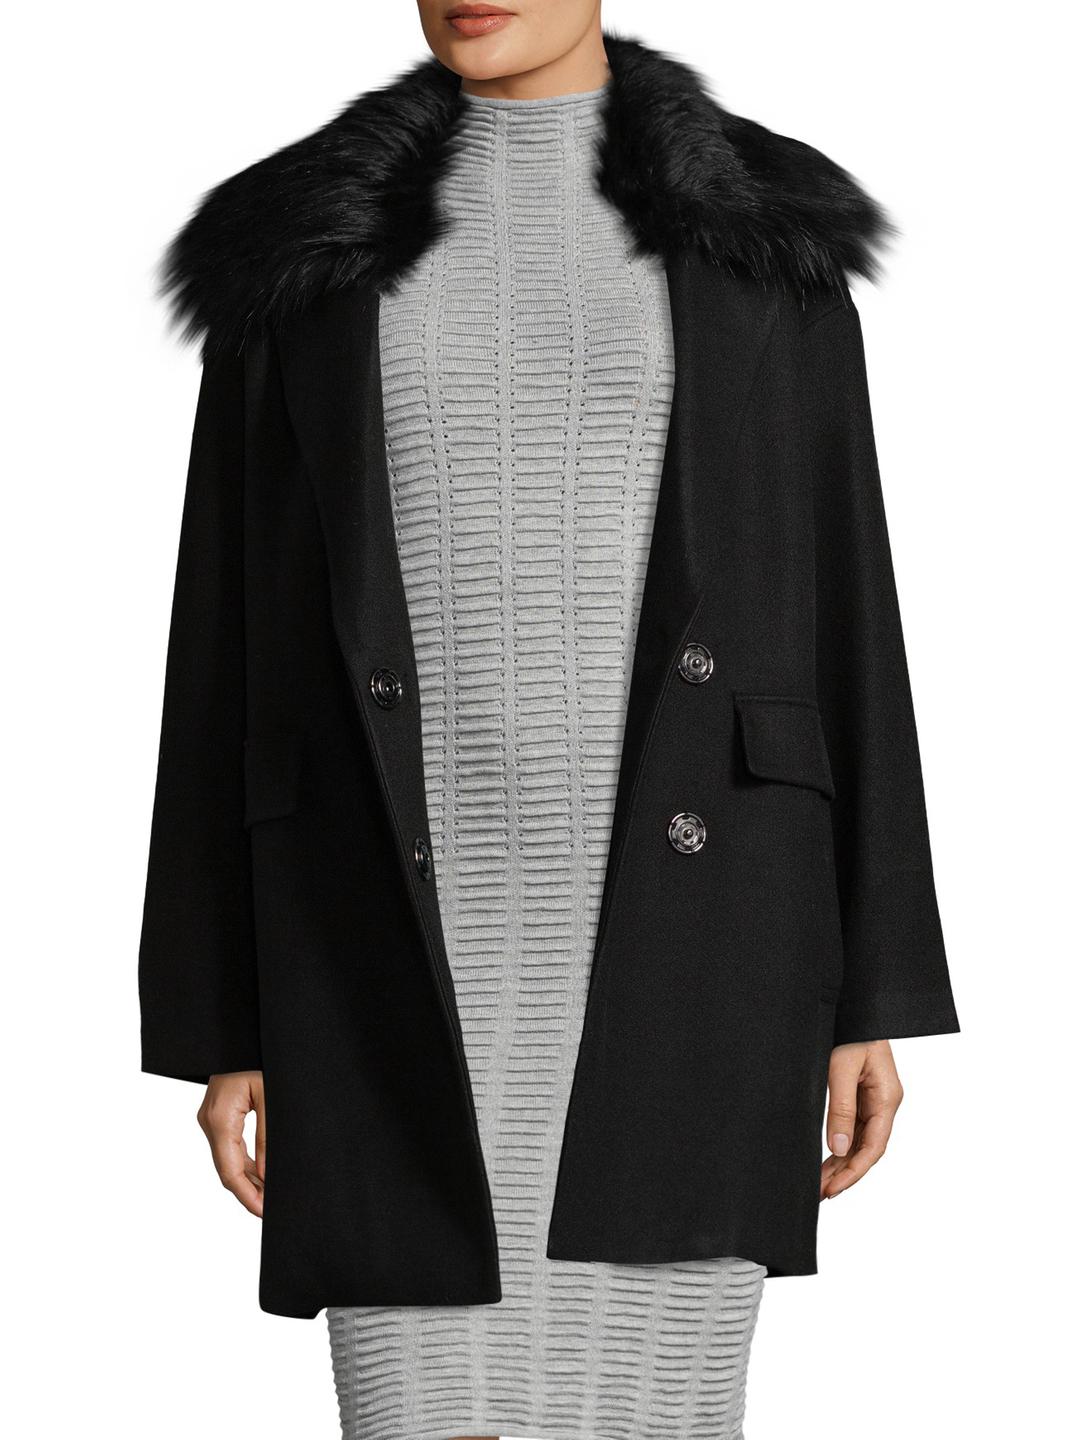 Lyst - Armani Exchange Faux Fur Collar Db Coat in Black - Save 44%